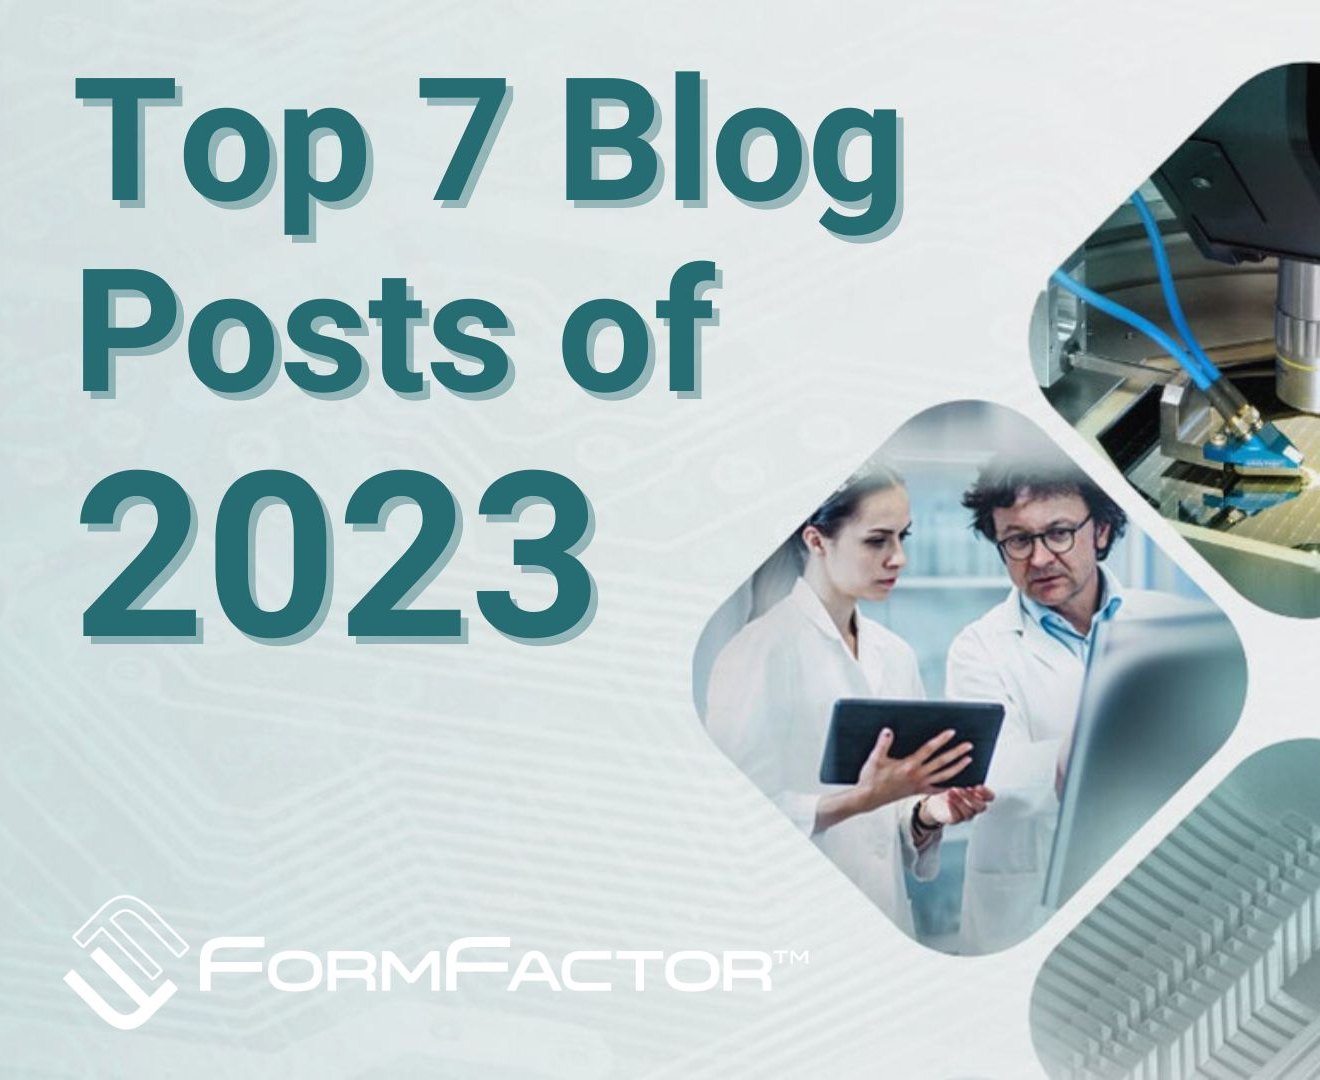 Top 7 Blog Posts of 2023